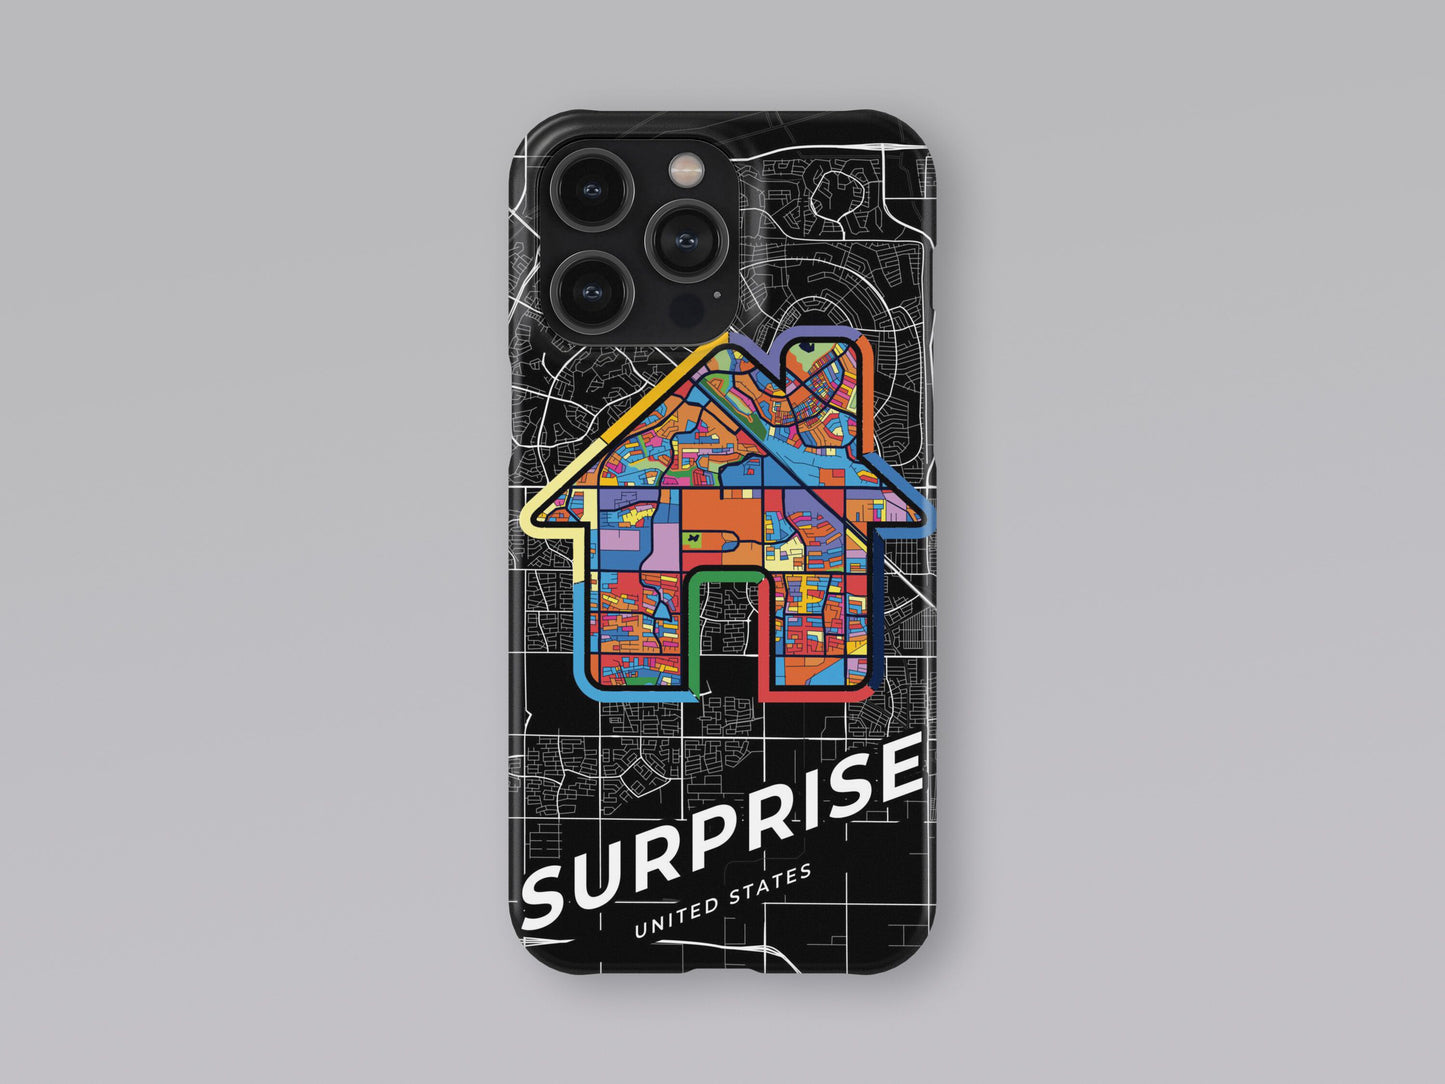 Surprise Arizona slim phone case with colorful icon 3